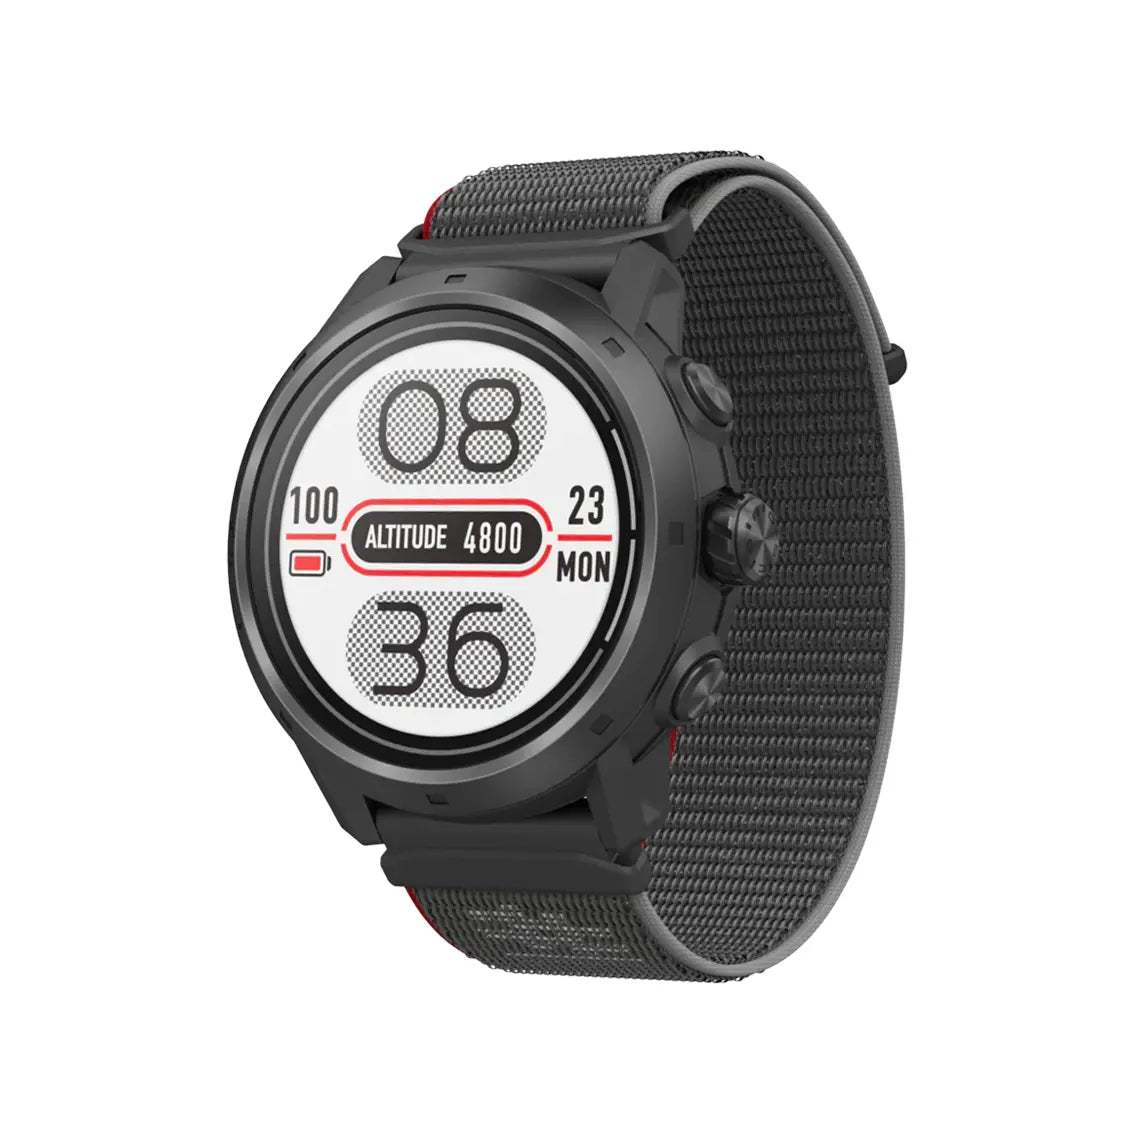 COROS Apex 2 Pro Multisport GPS Watch - Black